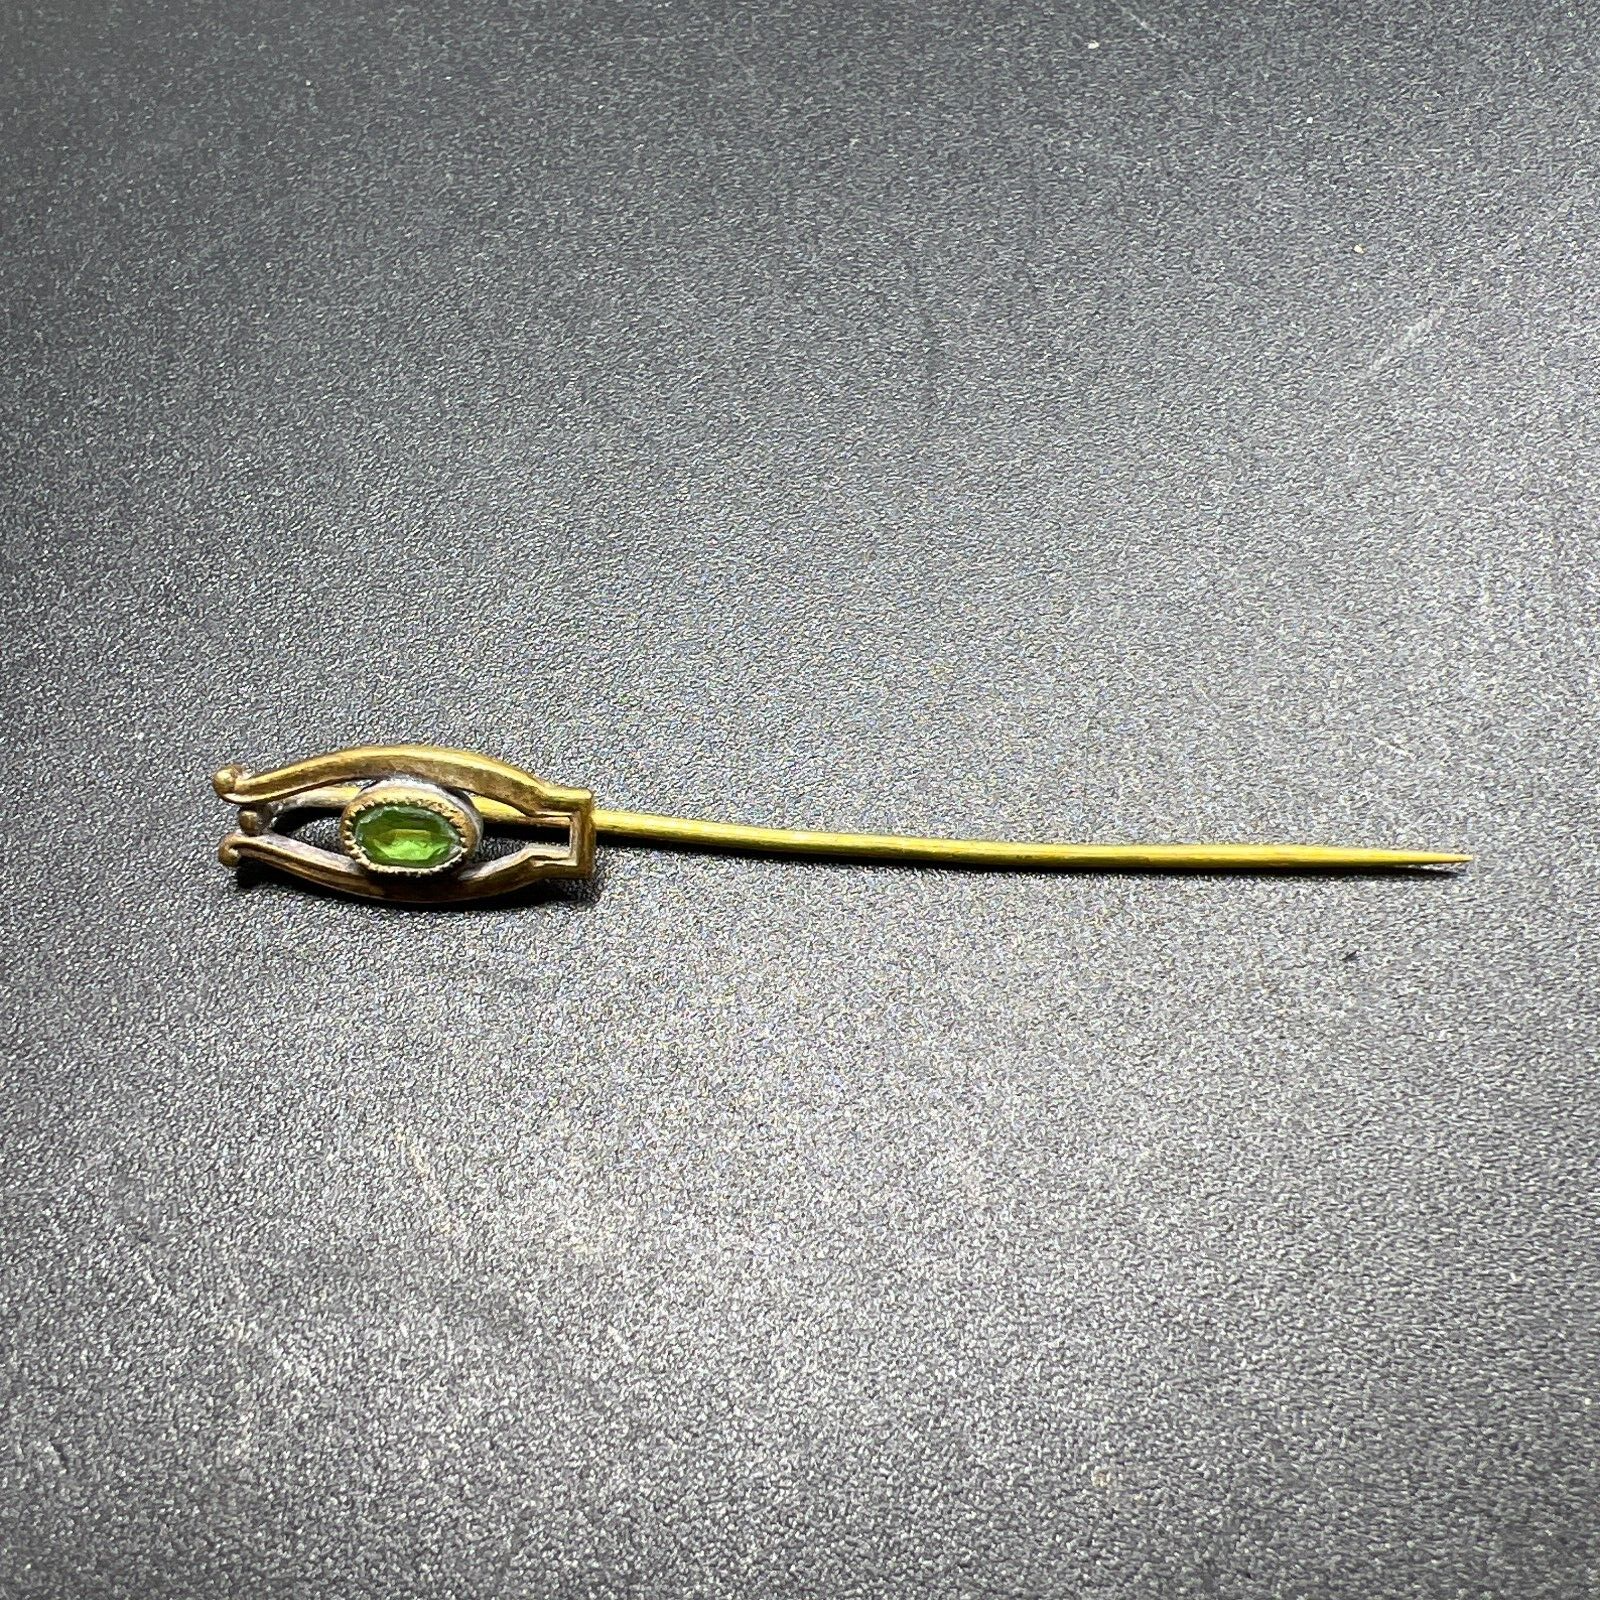 10 KT Costume Jewelry Gold Plate Green Stone Stick Pin 1.43g